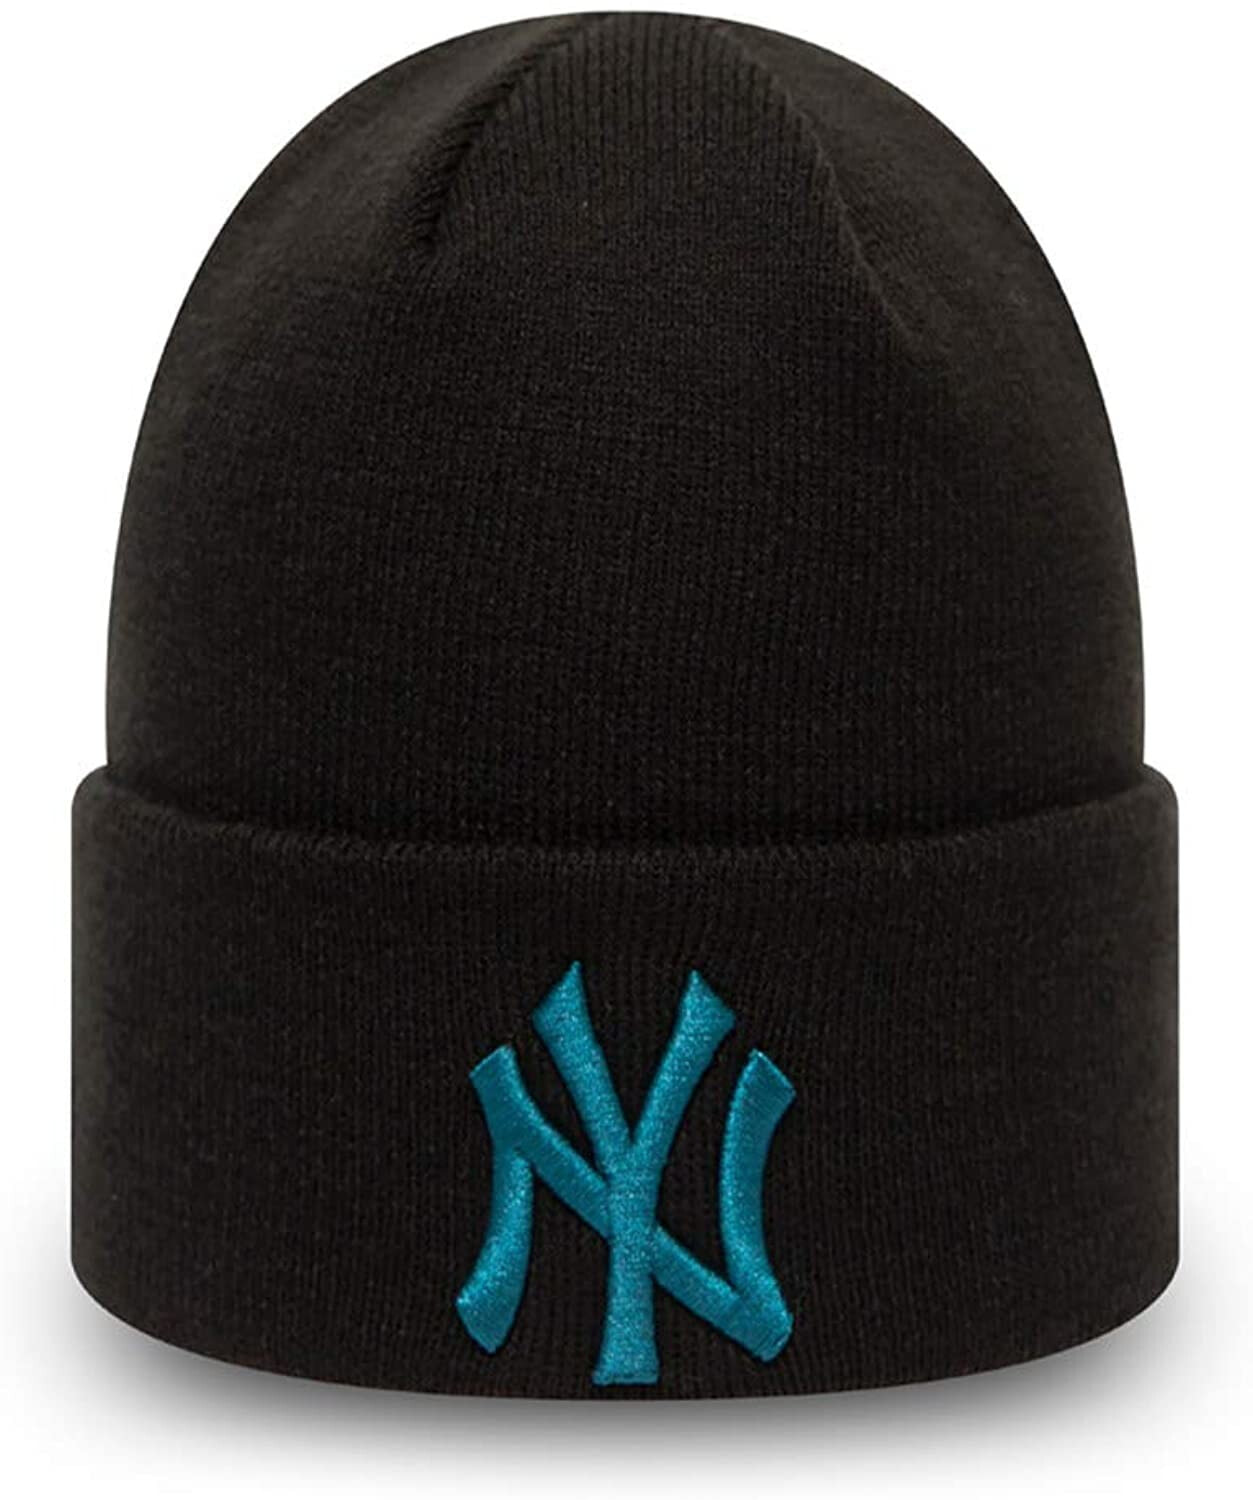 Мужская шапка черная трикотажная New Era League Essential Cuff NY Yankees Black Turquoise